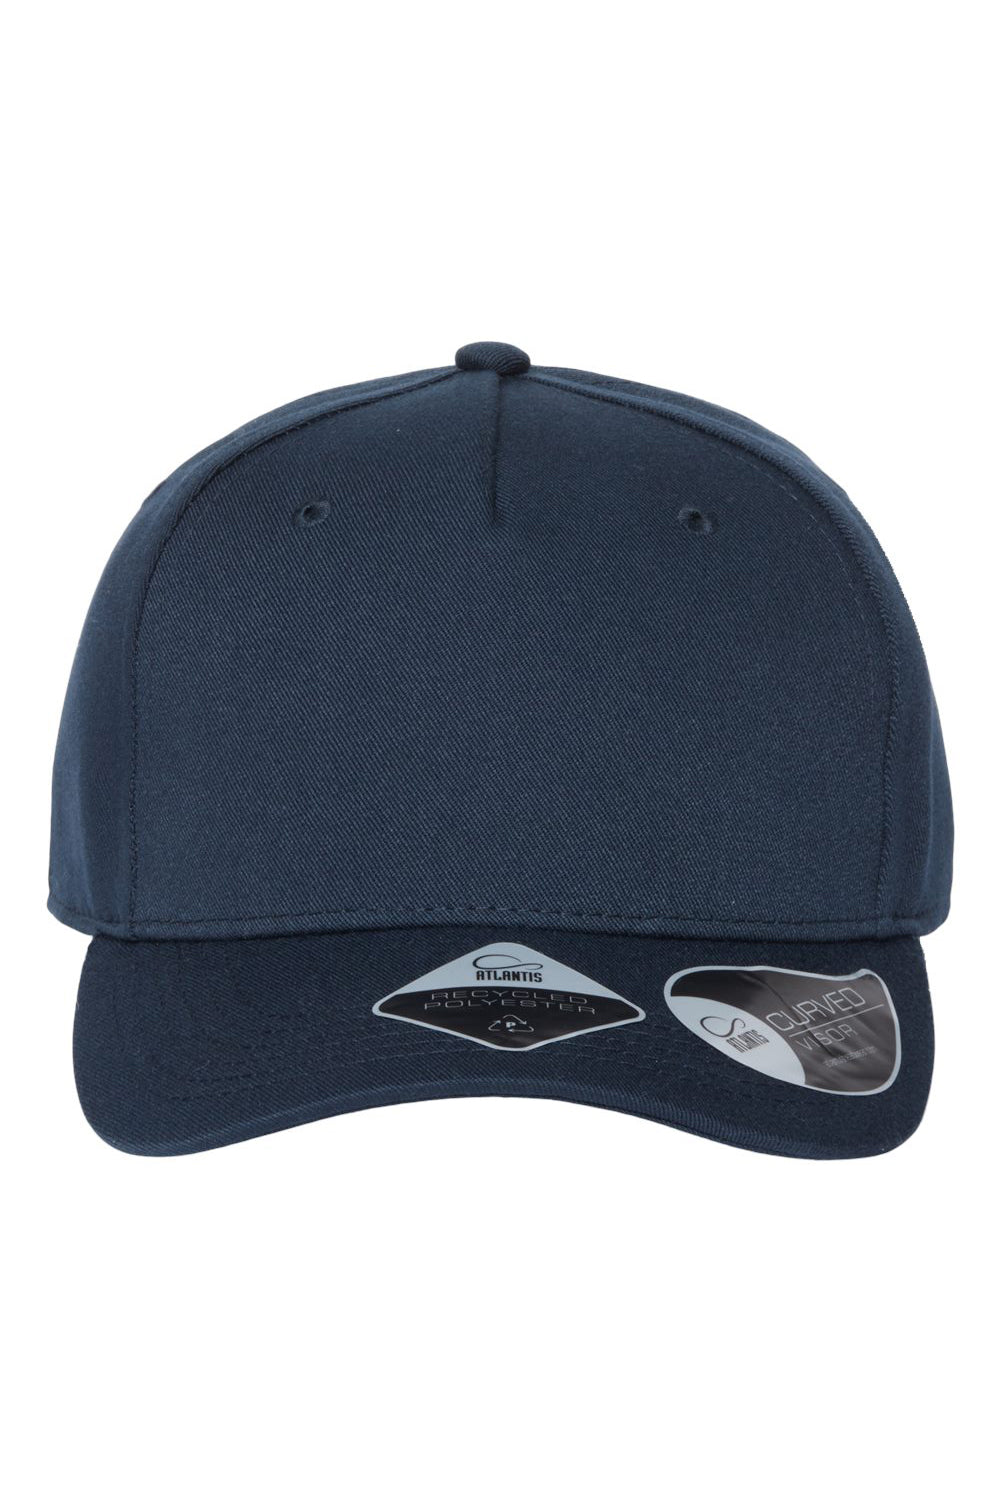 Atlantis Headwear FIJI Mens Sustainable Adjustable Hat Navy Blue Flat Front